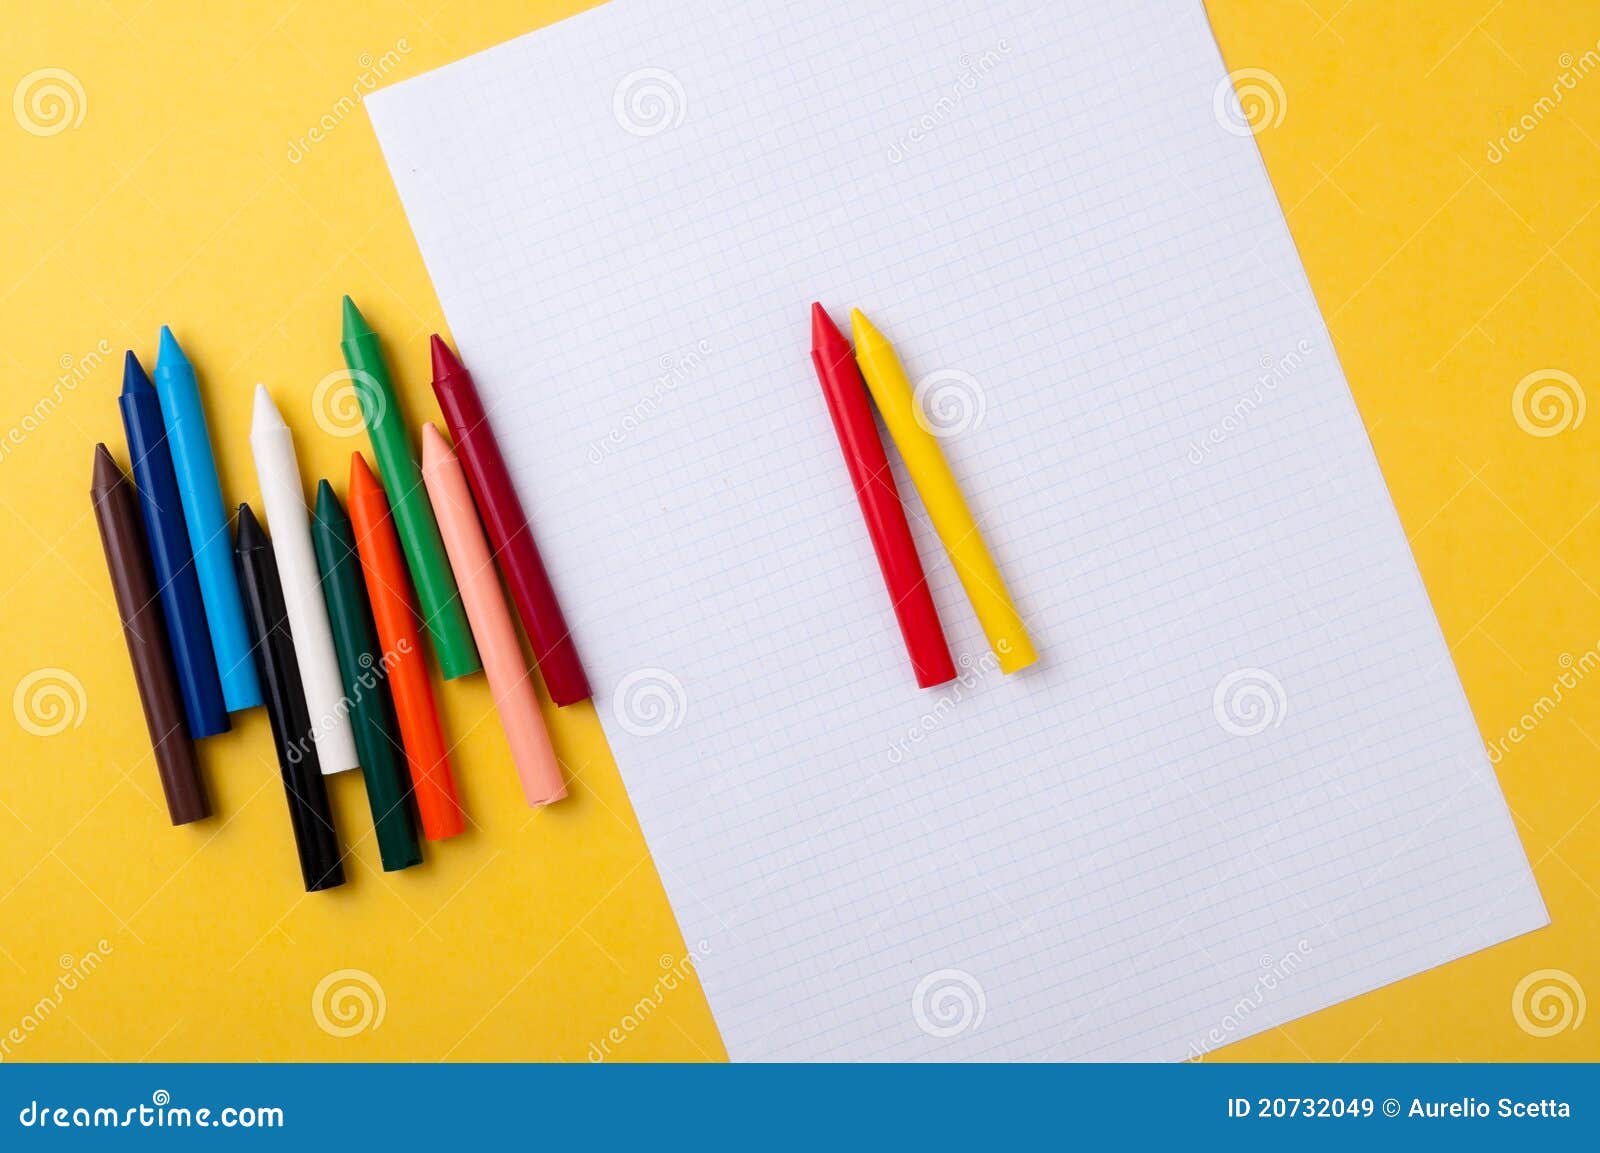 drawing-paper-crayons-20732049.jpg